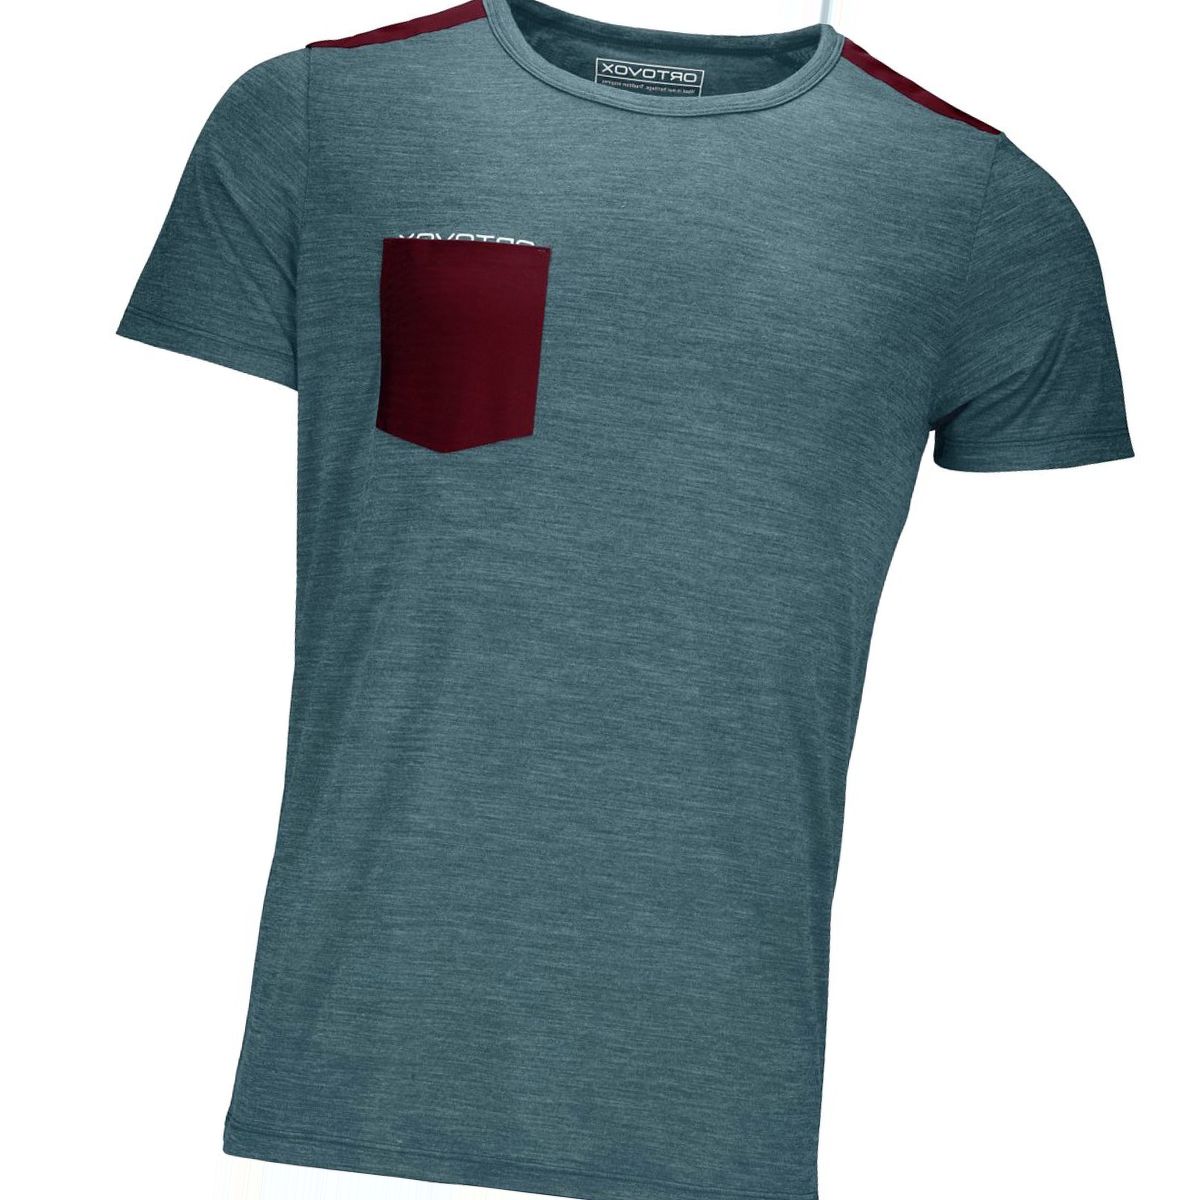 Ortovox 120 Cool Tec Short-Sleeve T-Shirt - Men's